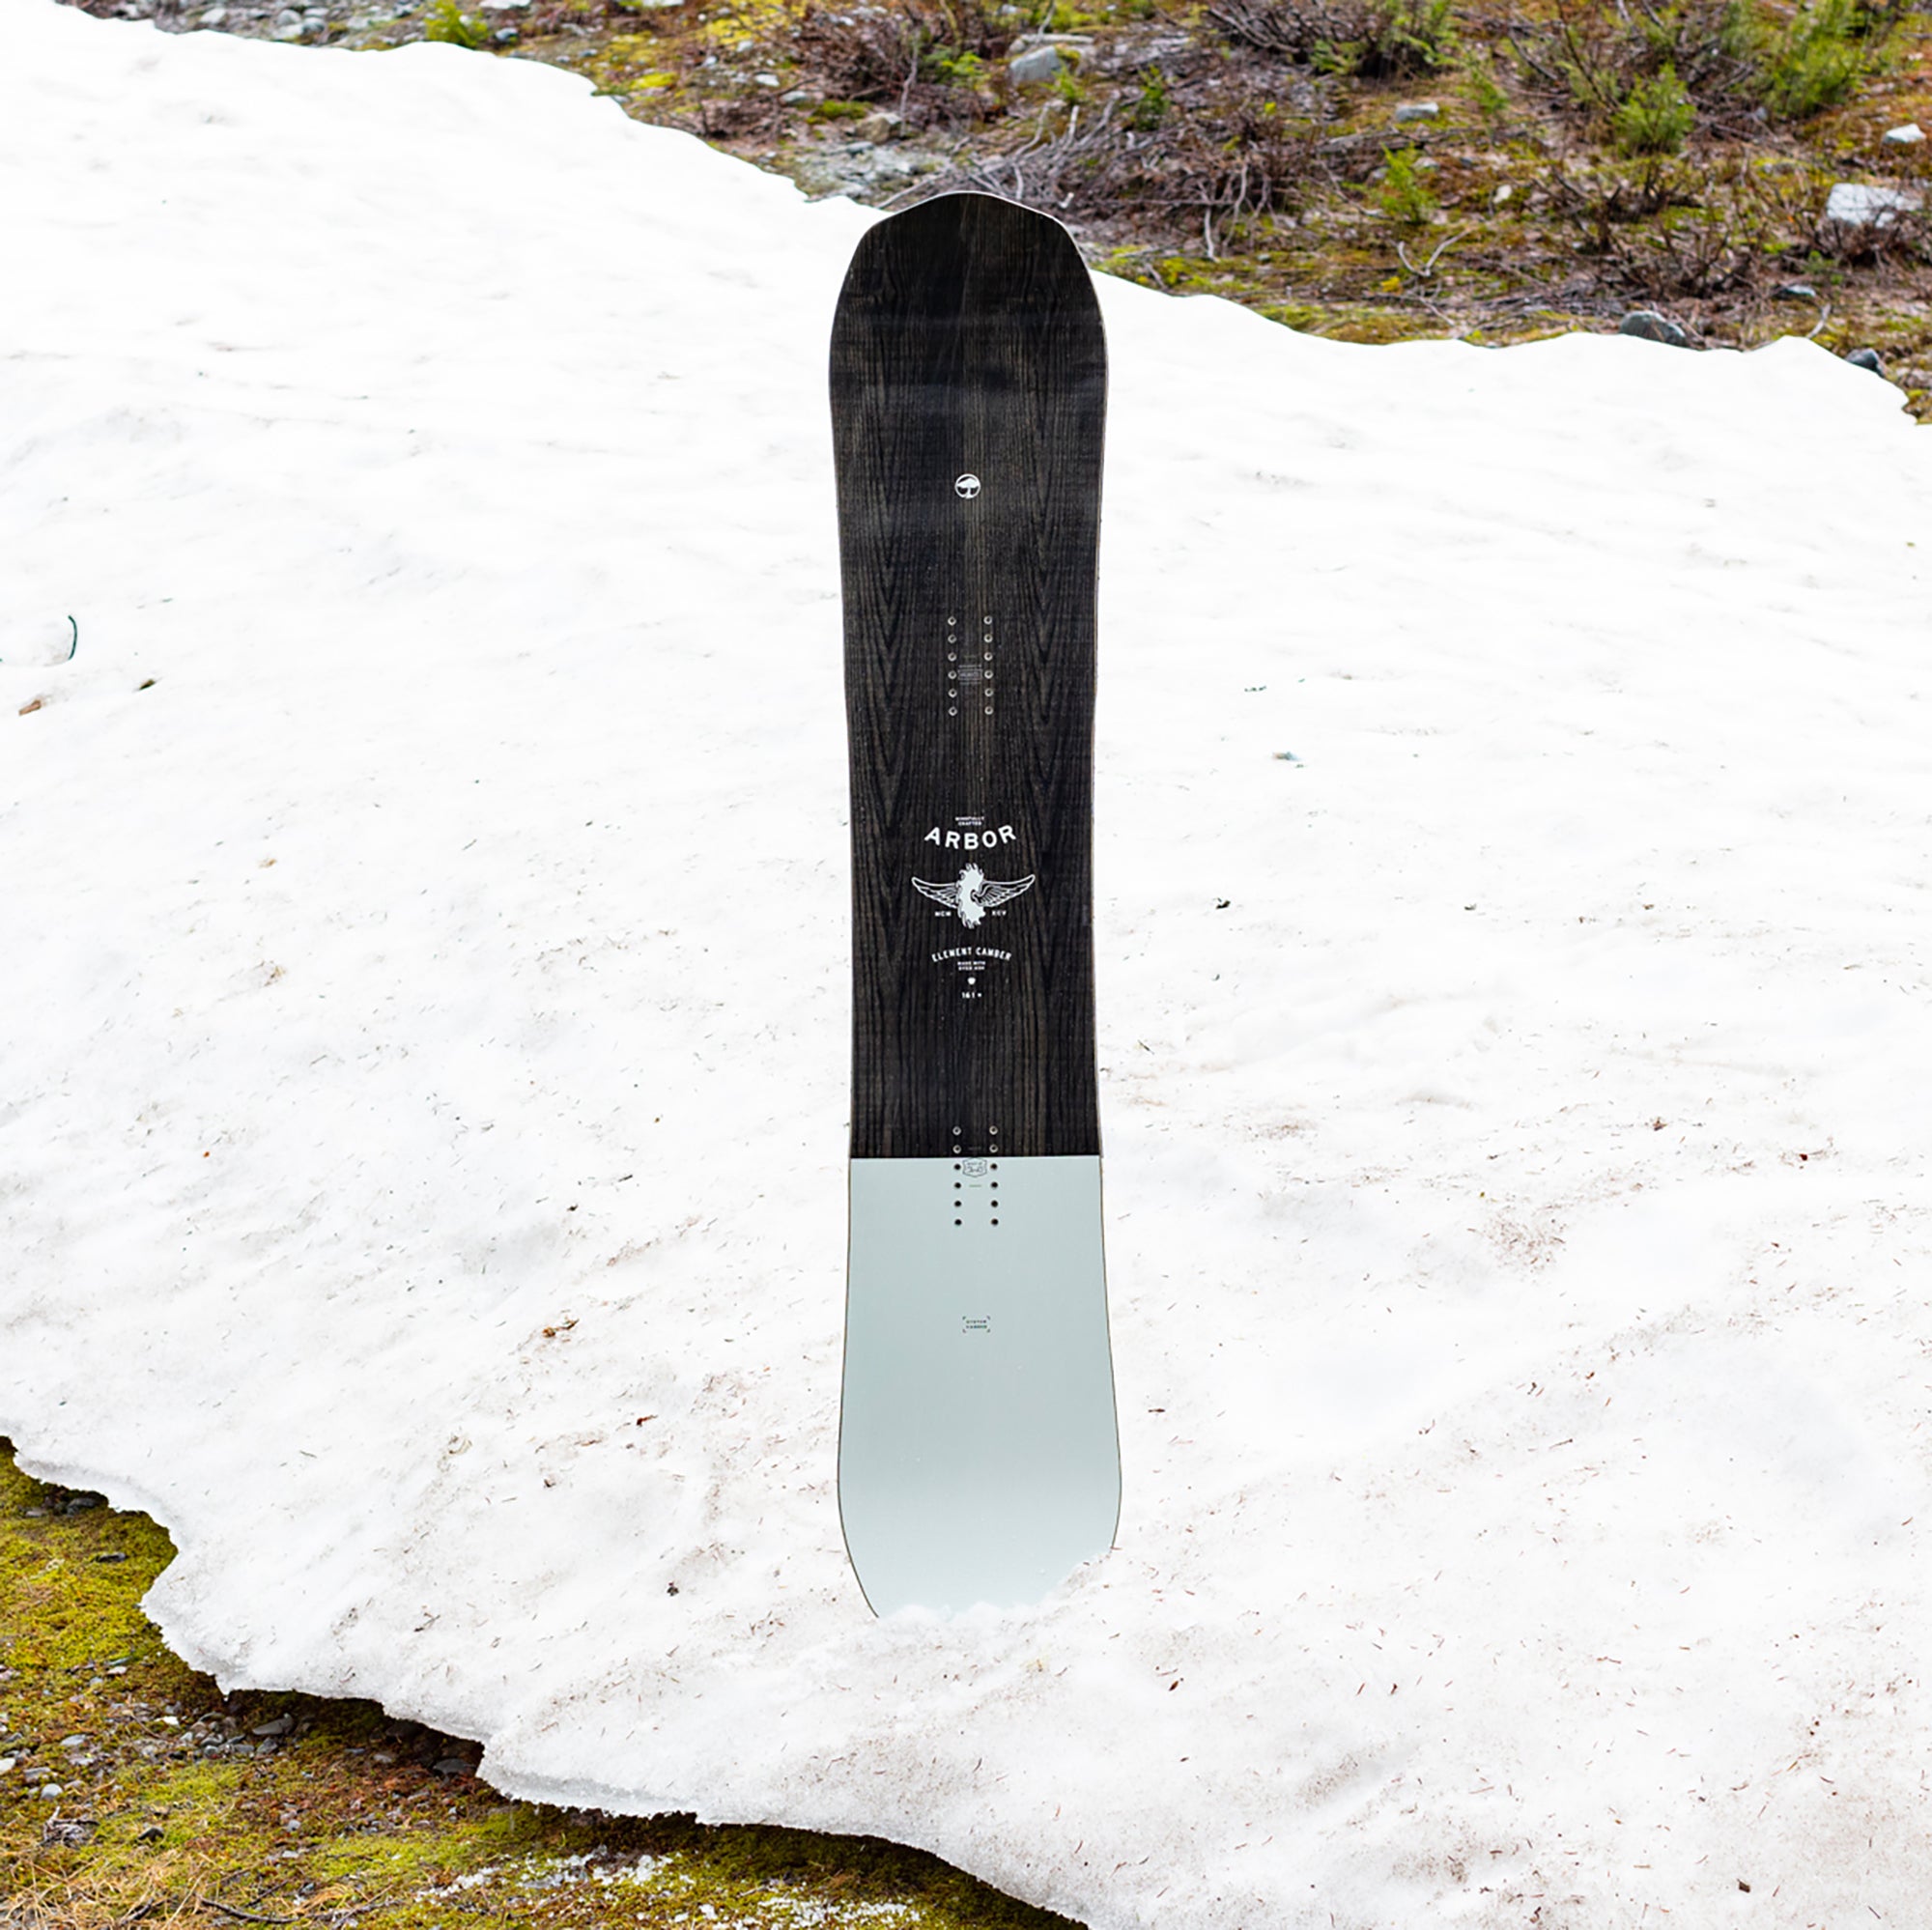 Arbor Men's Element Camber Snowboard 2024